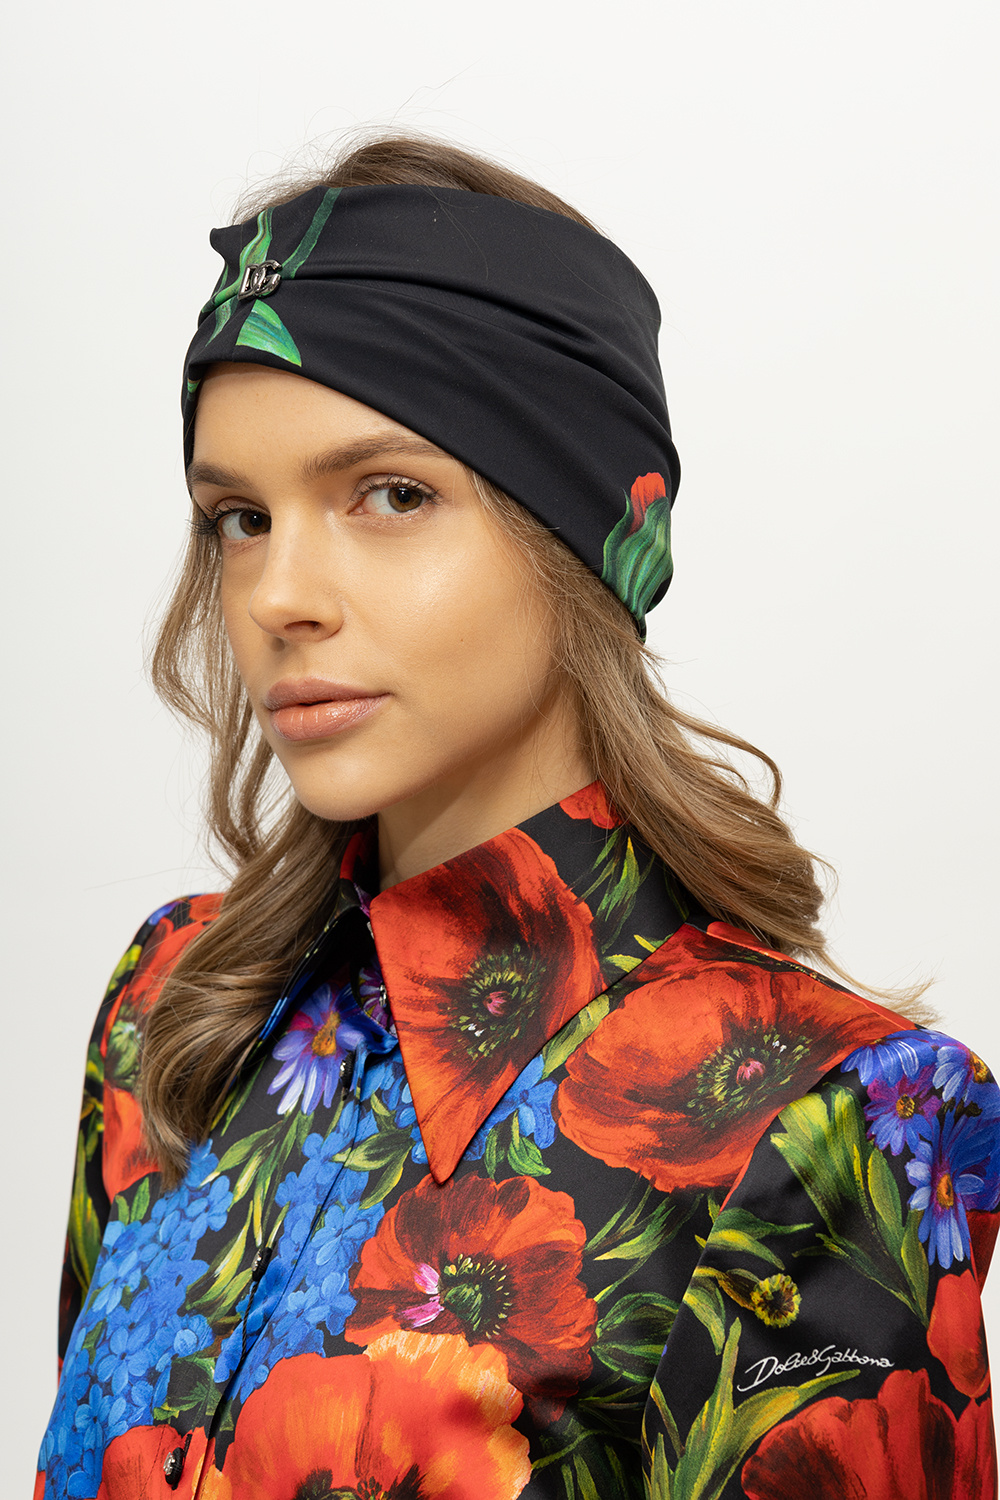 dolce gabbana graffitti logo hoodie item Floral headband